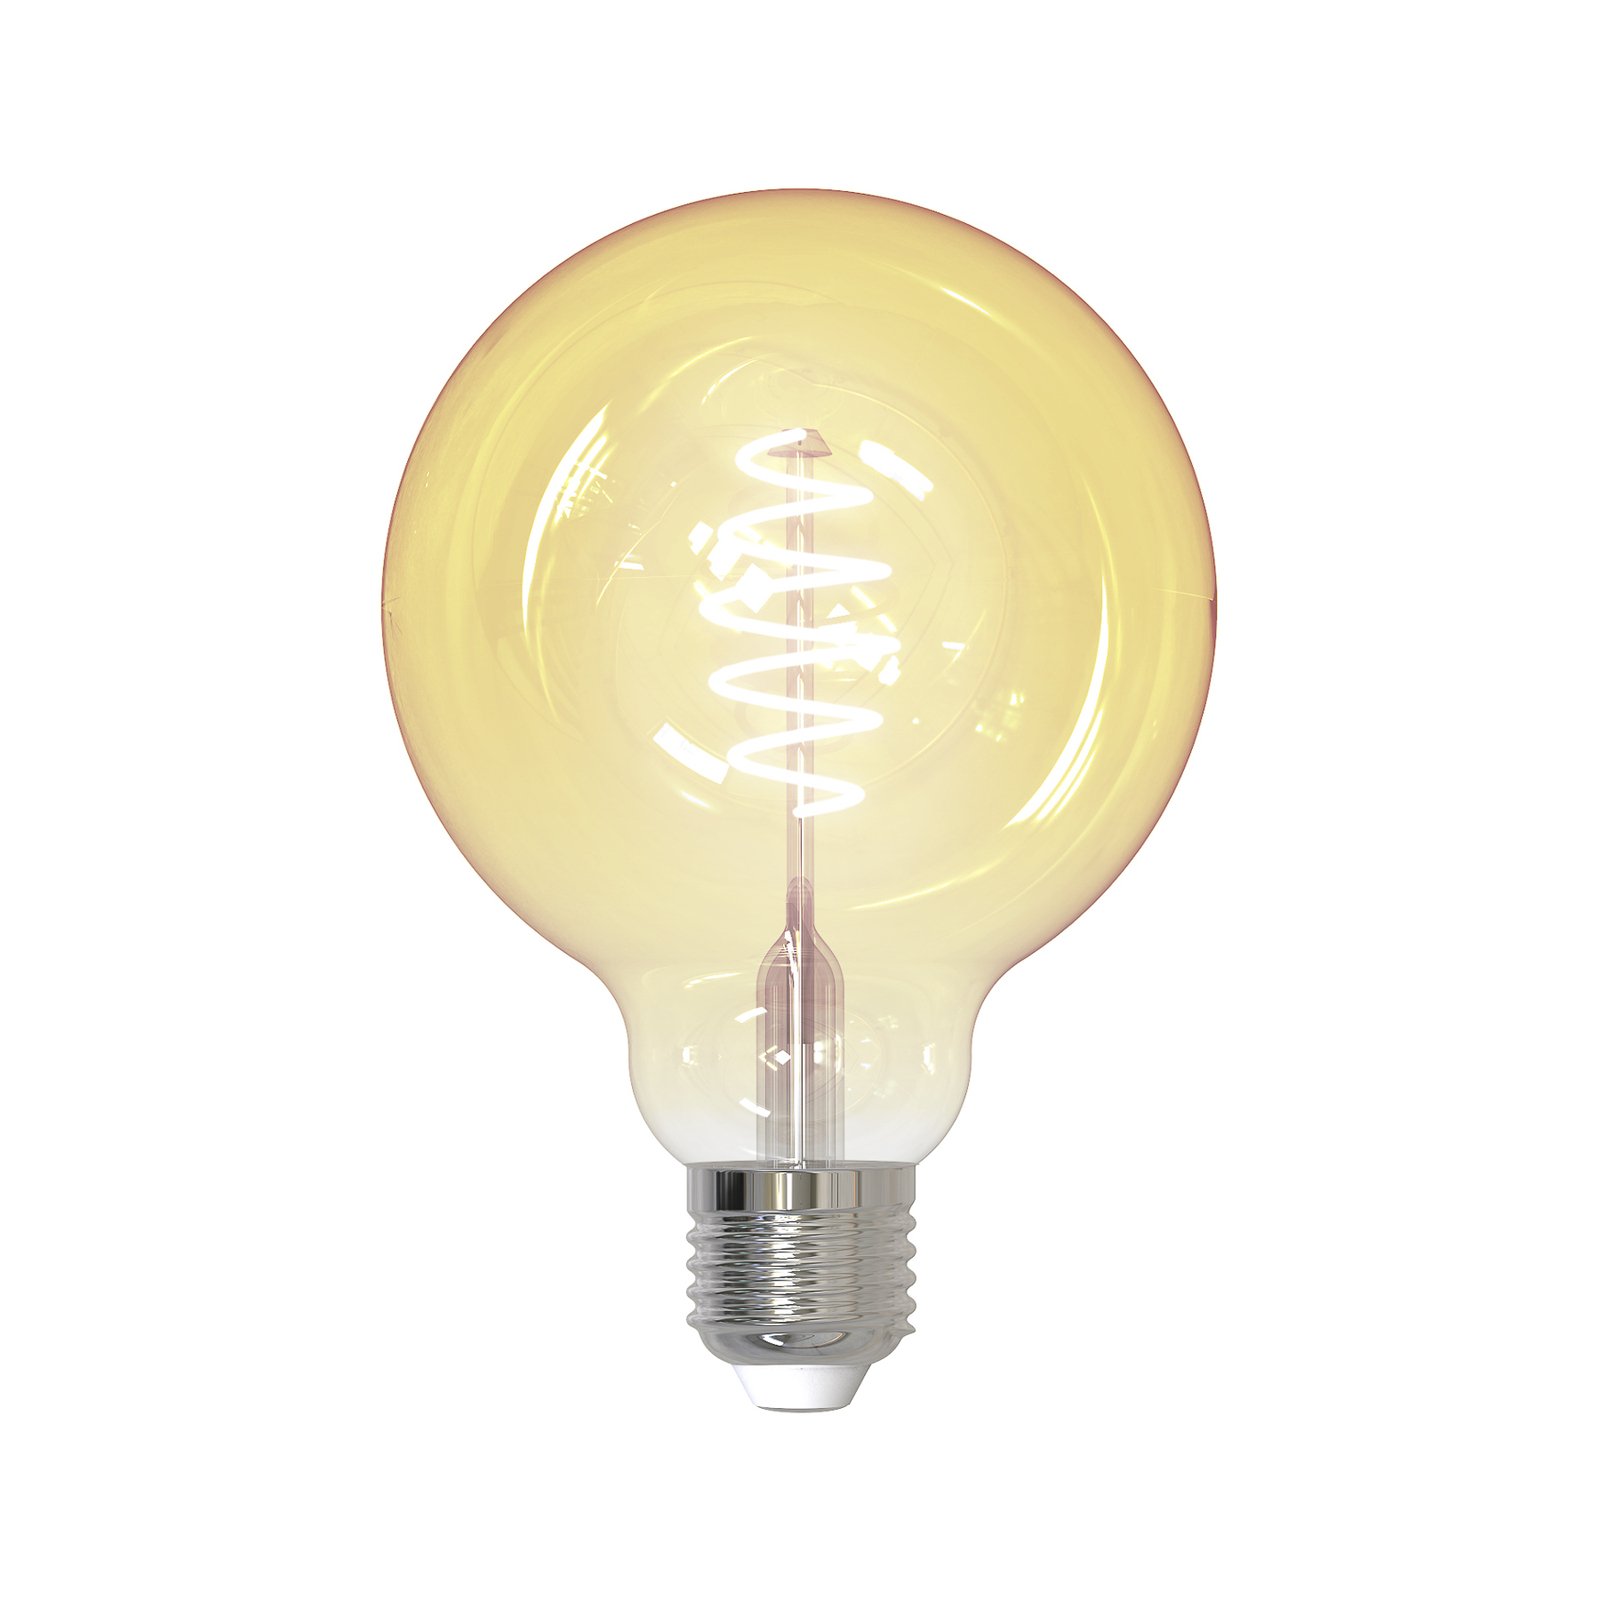 LUUMR Smart ampoule globe LED 2 pièces E27 G95 4,9W ambre clair Tuya